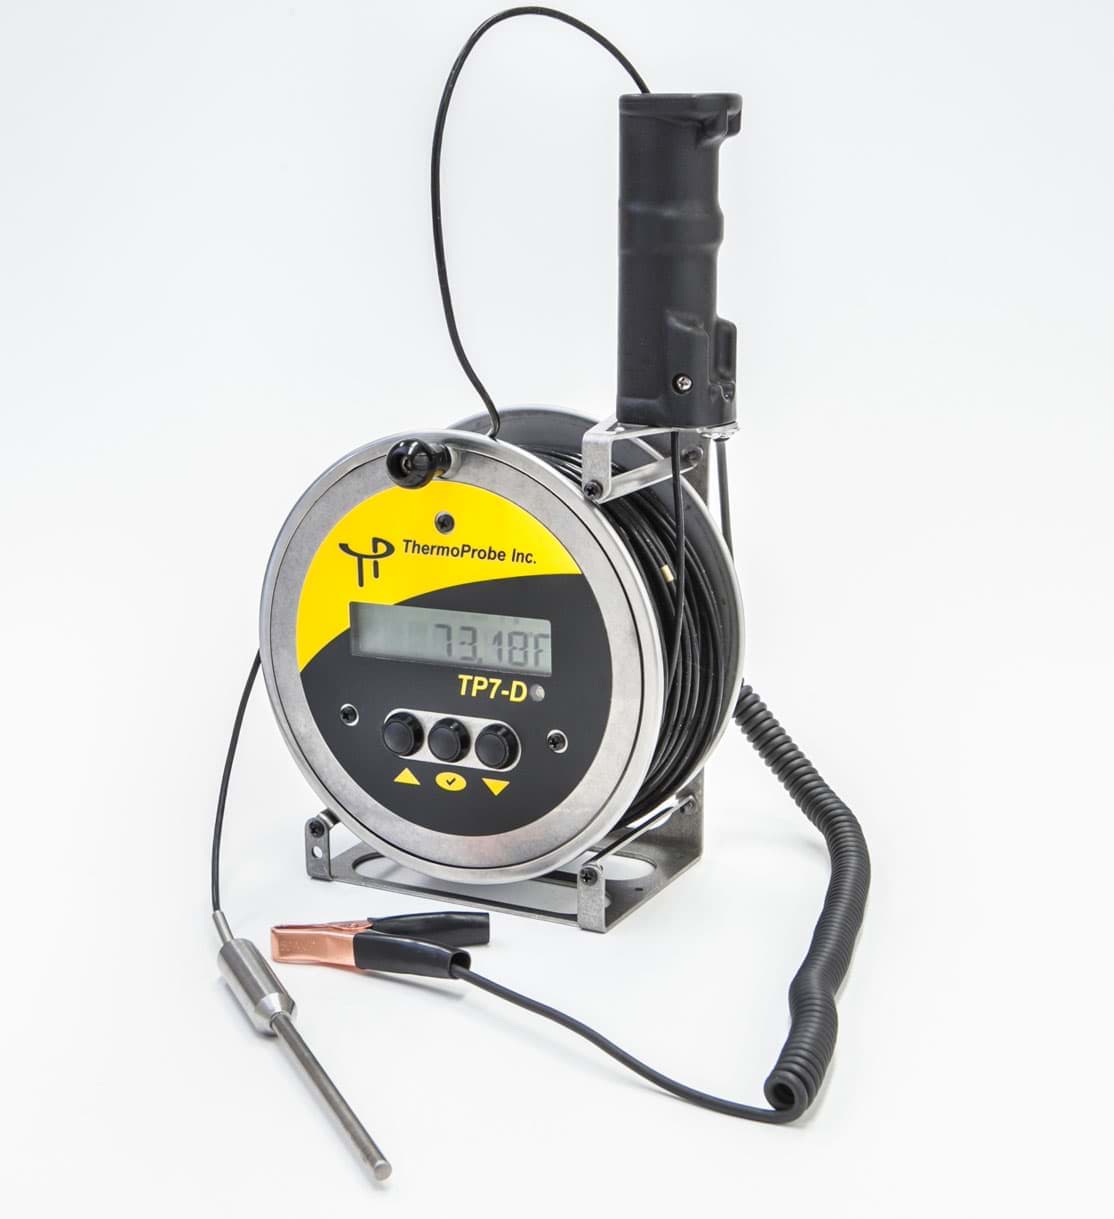 https://parkesscientific.com/media/image/241/thermoprobe-tp7d-portable-gauging-thermometer-241.jpg